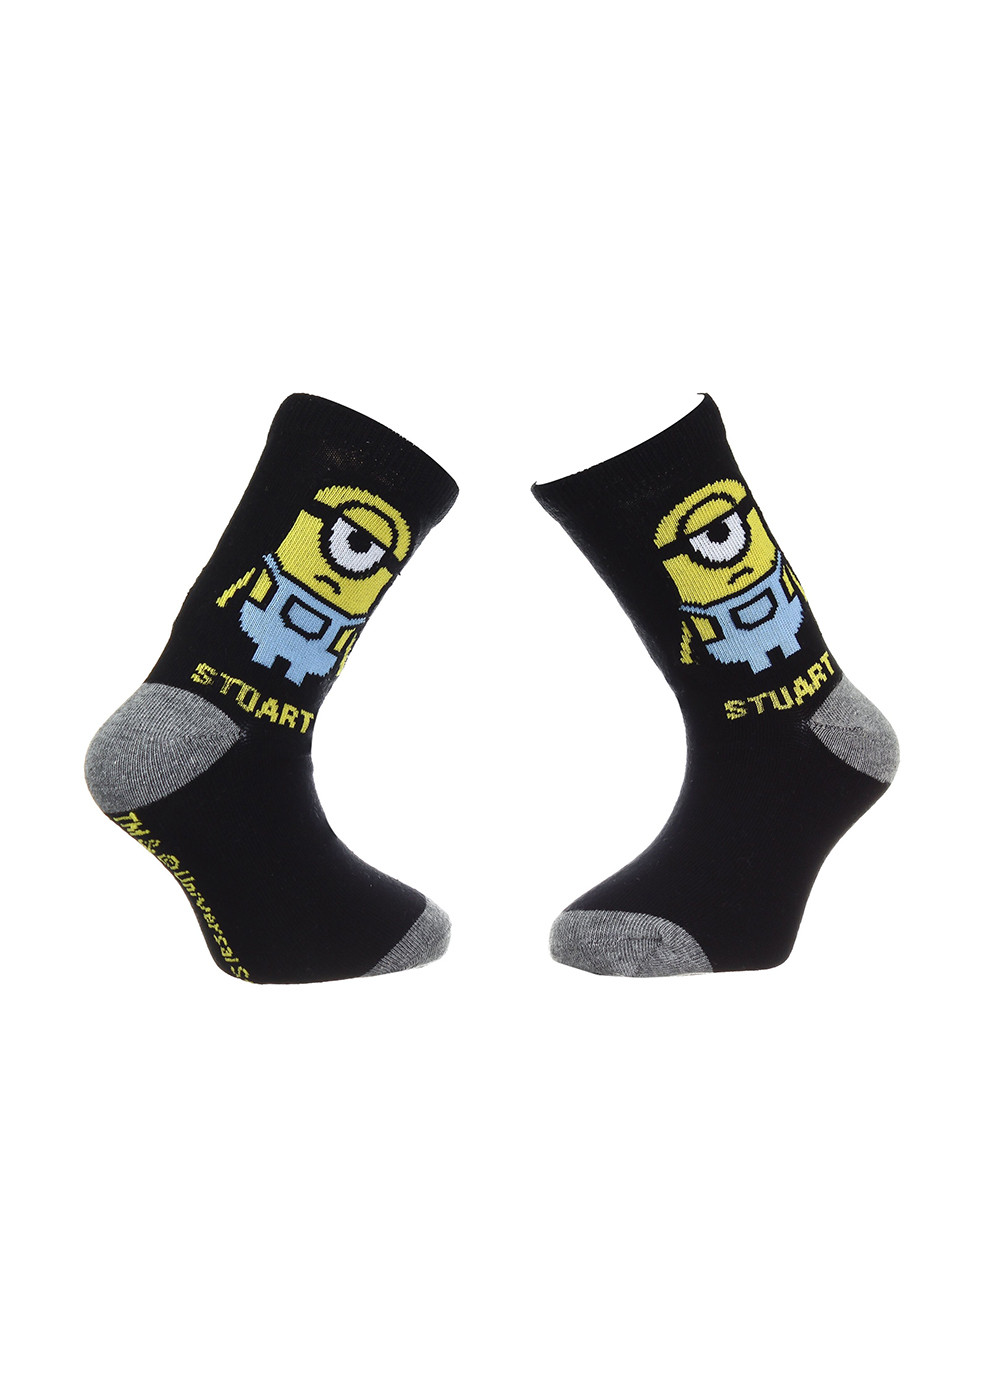 Шкарпетки Stuart black/gray Minions (260943938)